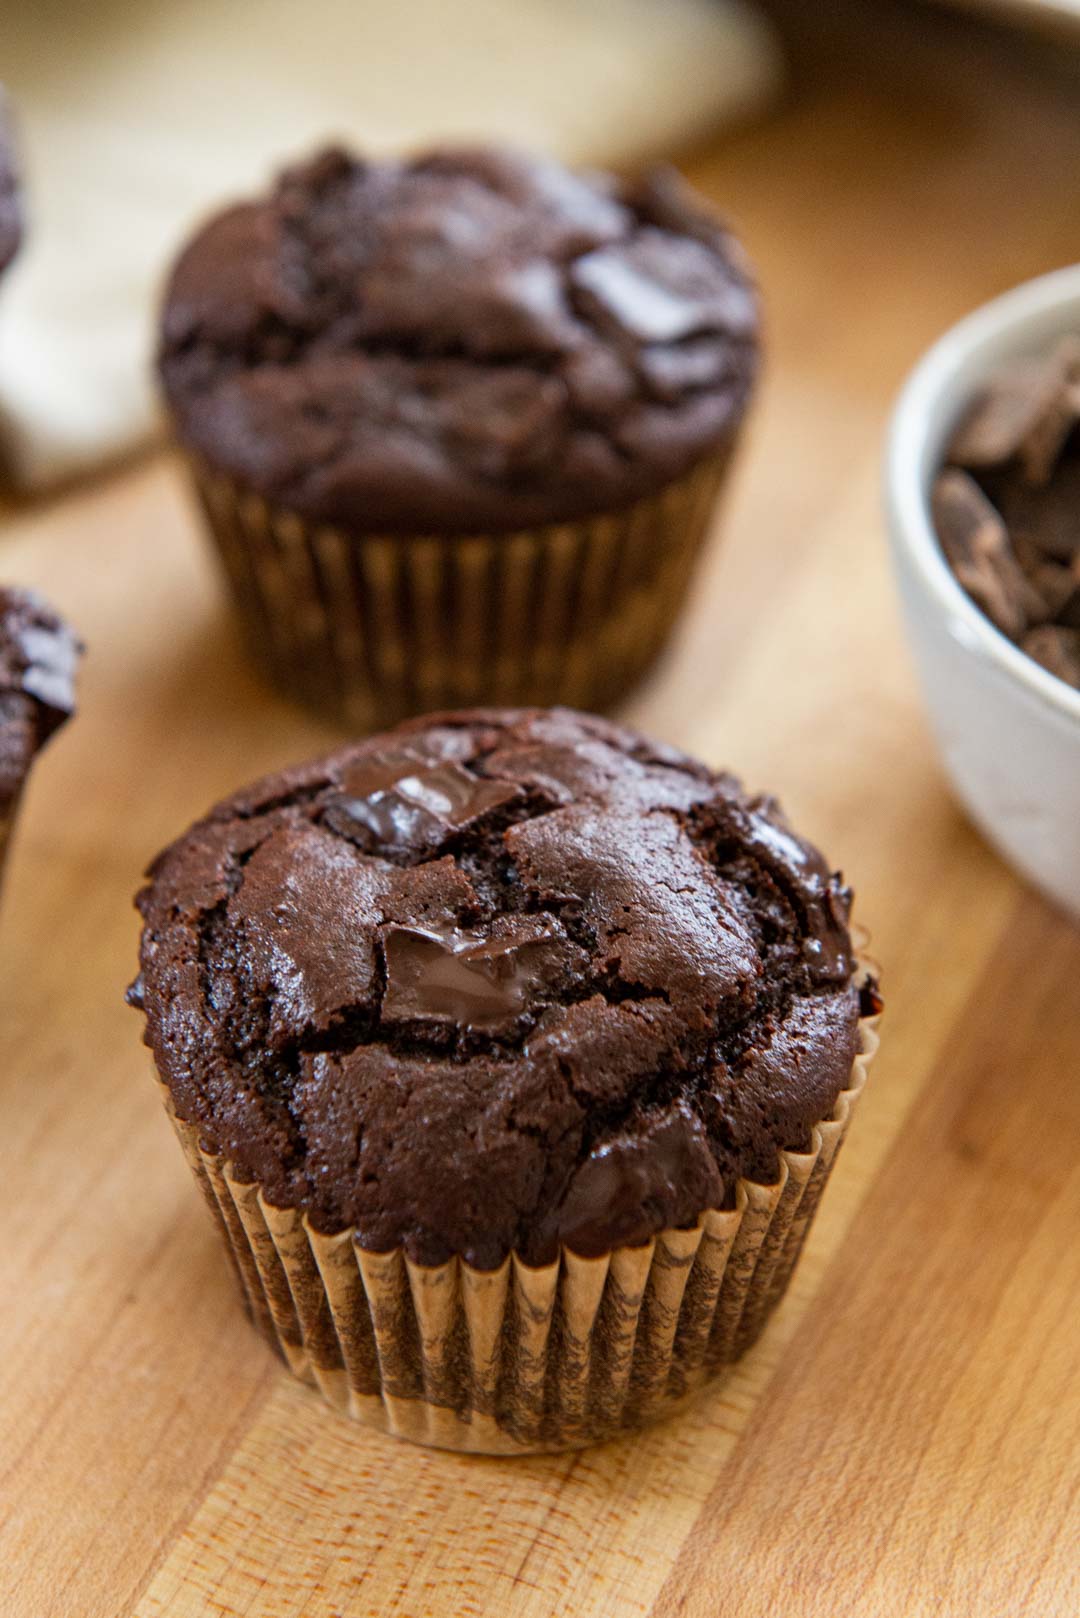 Mini Double Chocolate Muffins